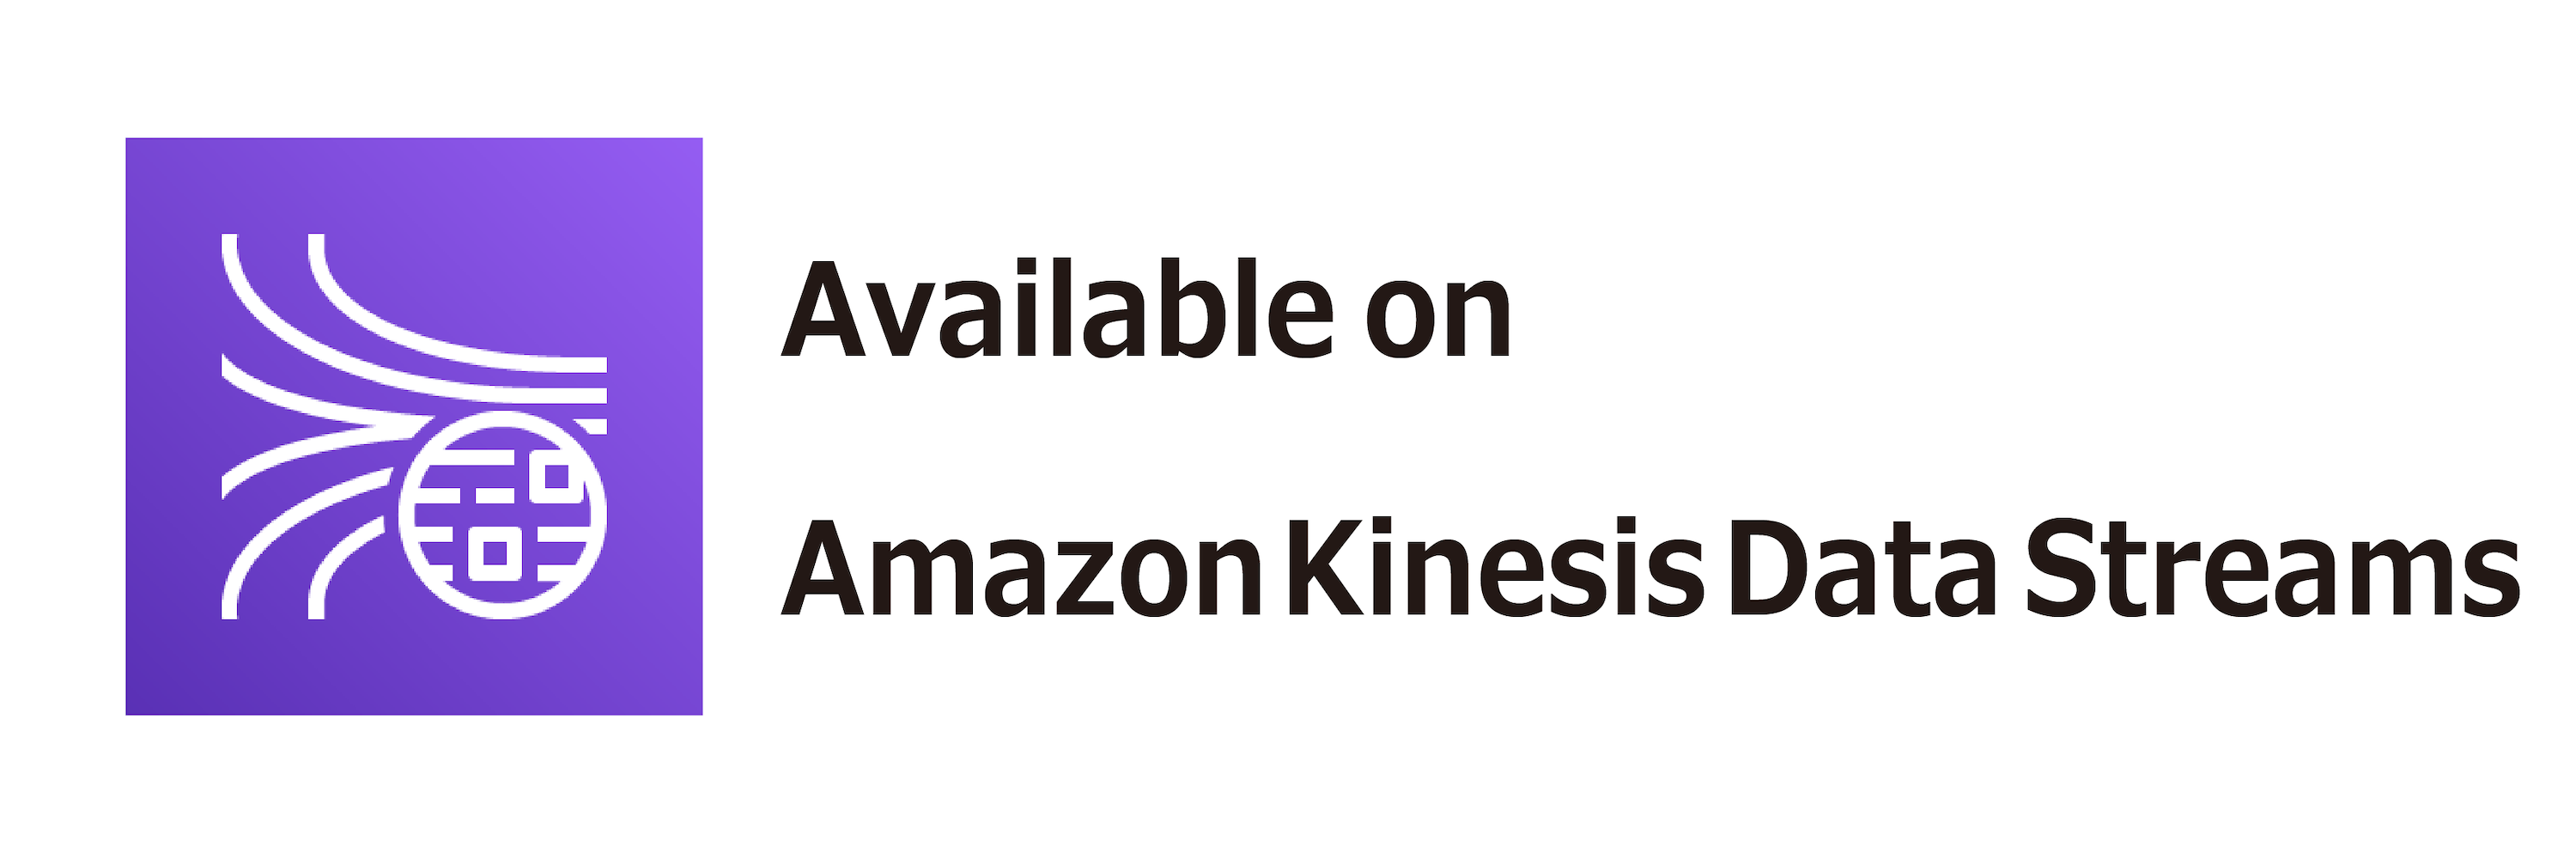 available on Amazon Kinesis Data Streams